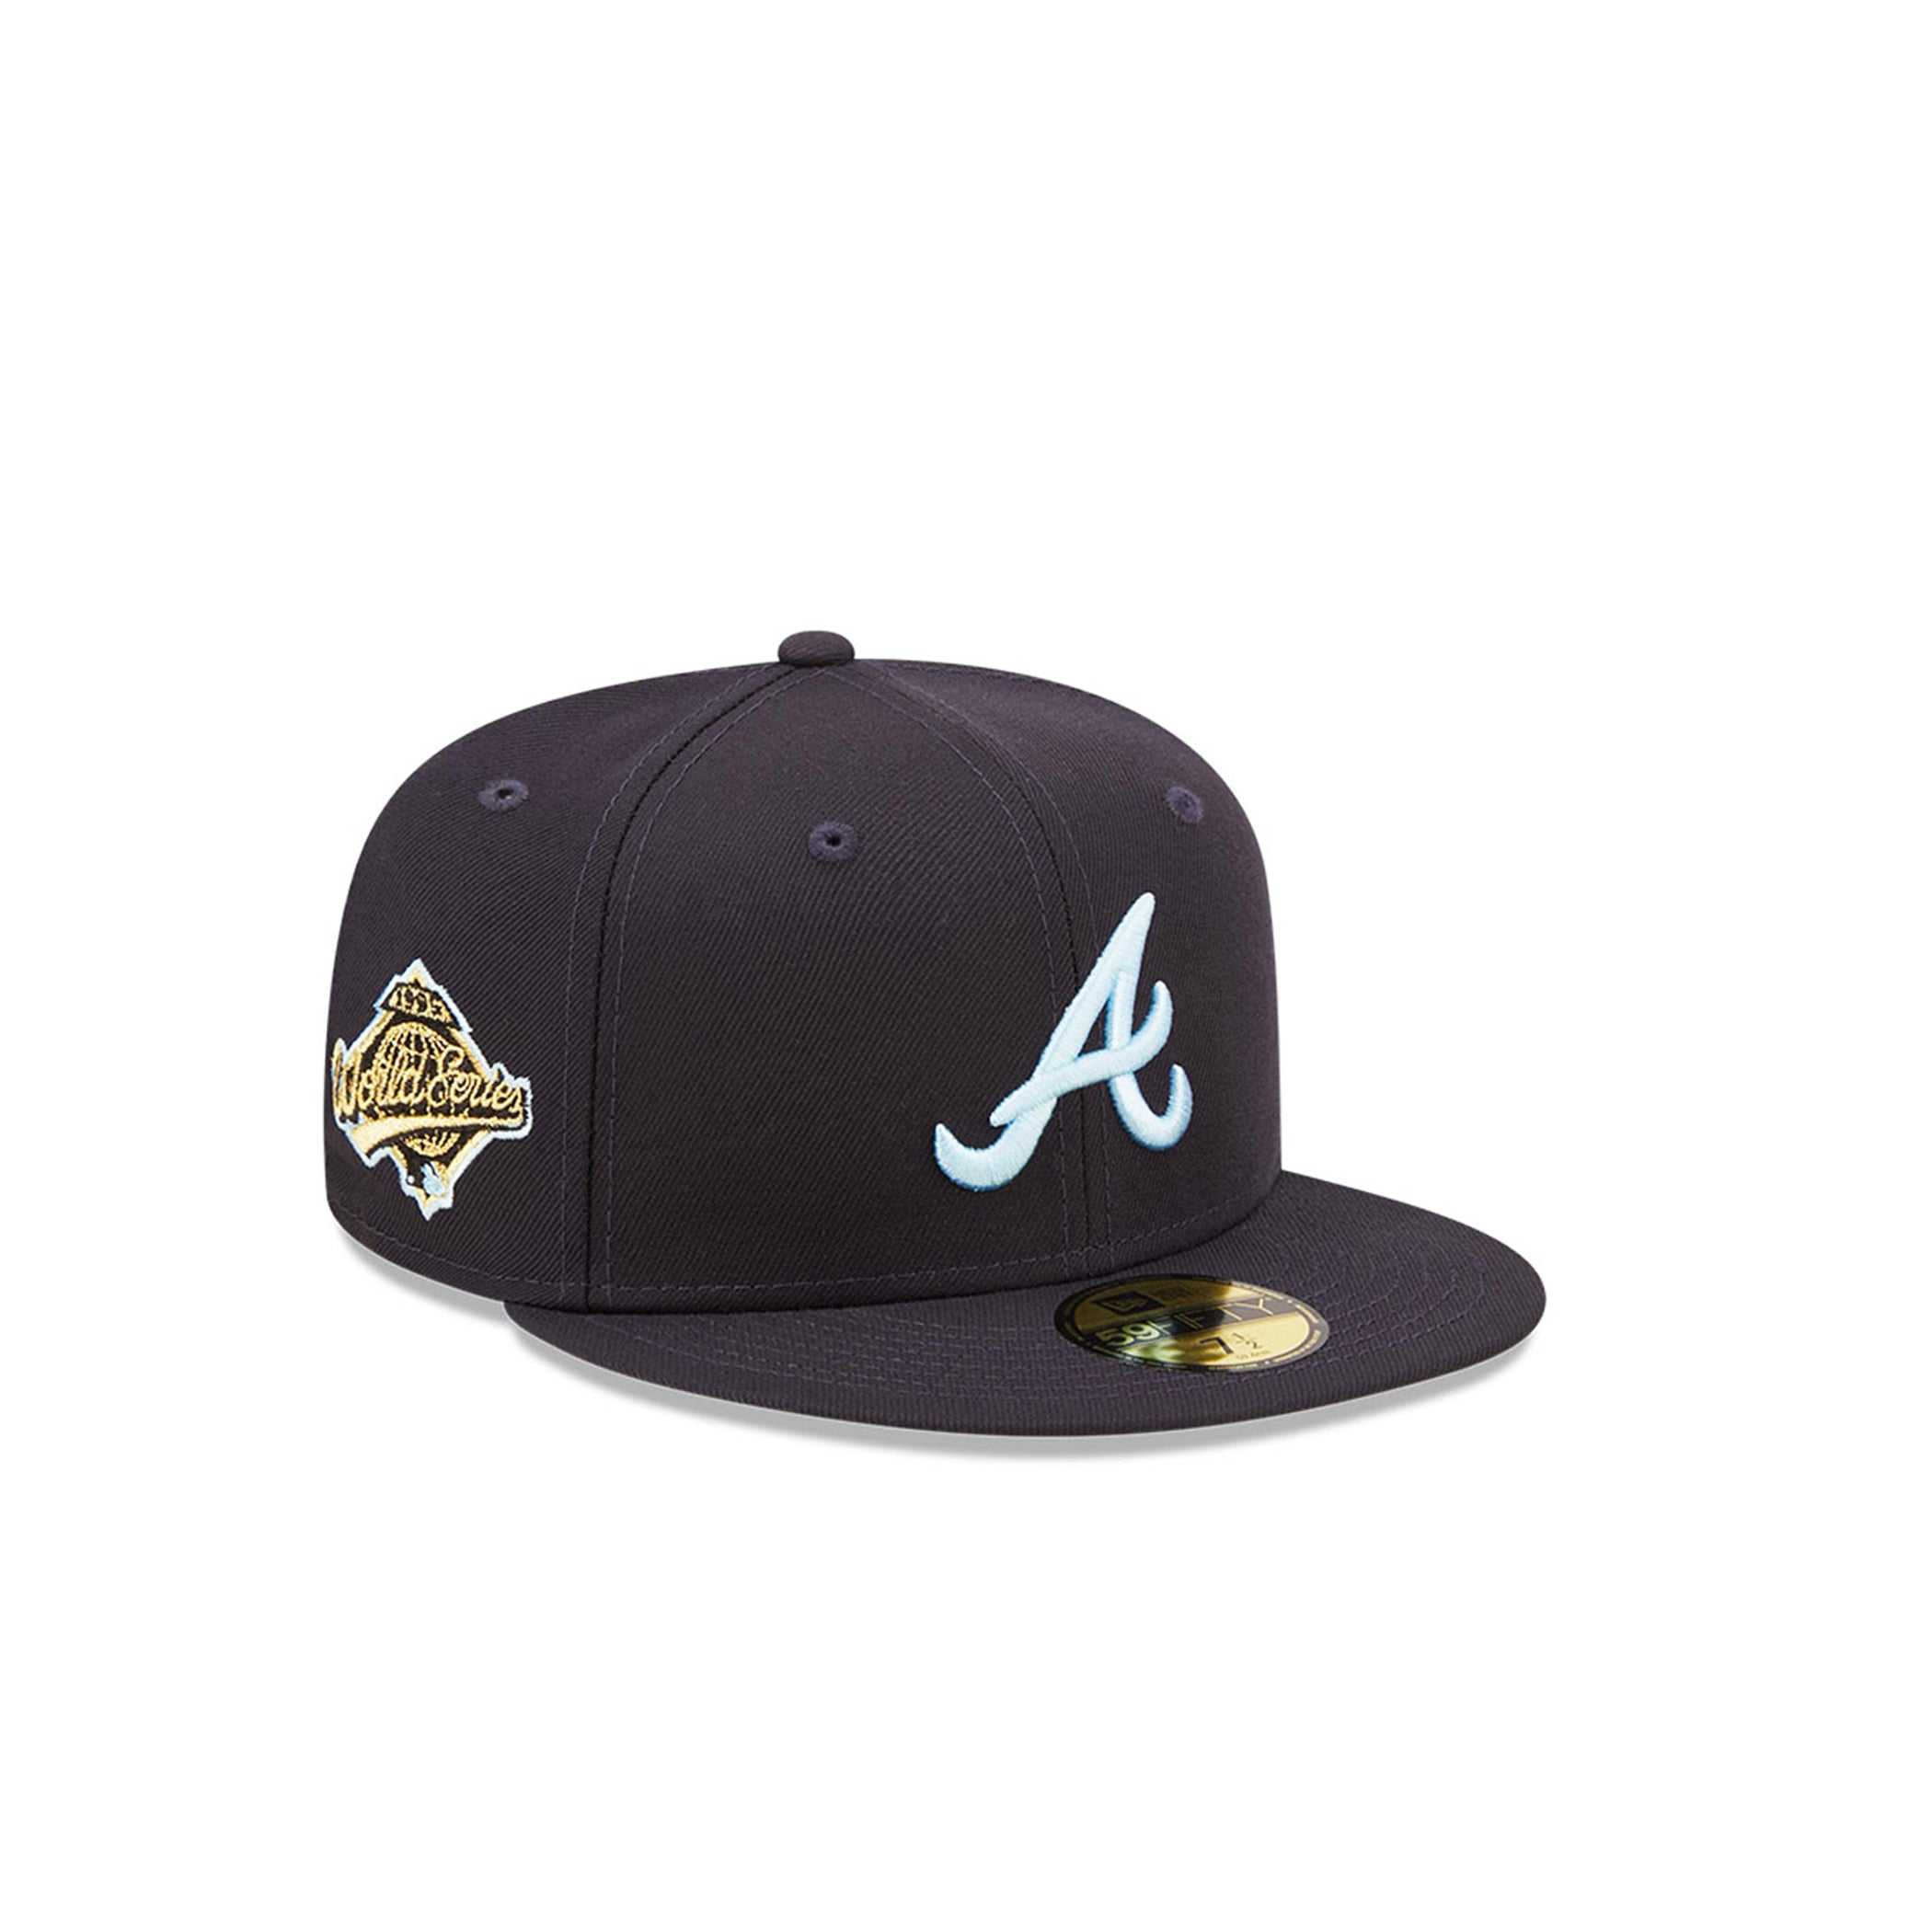 New Era 59FIFTY Atlanta Braves Fitted Black White Hat